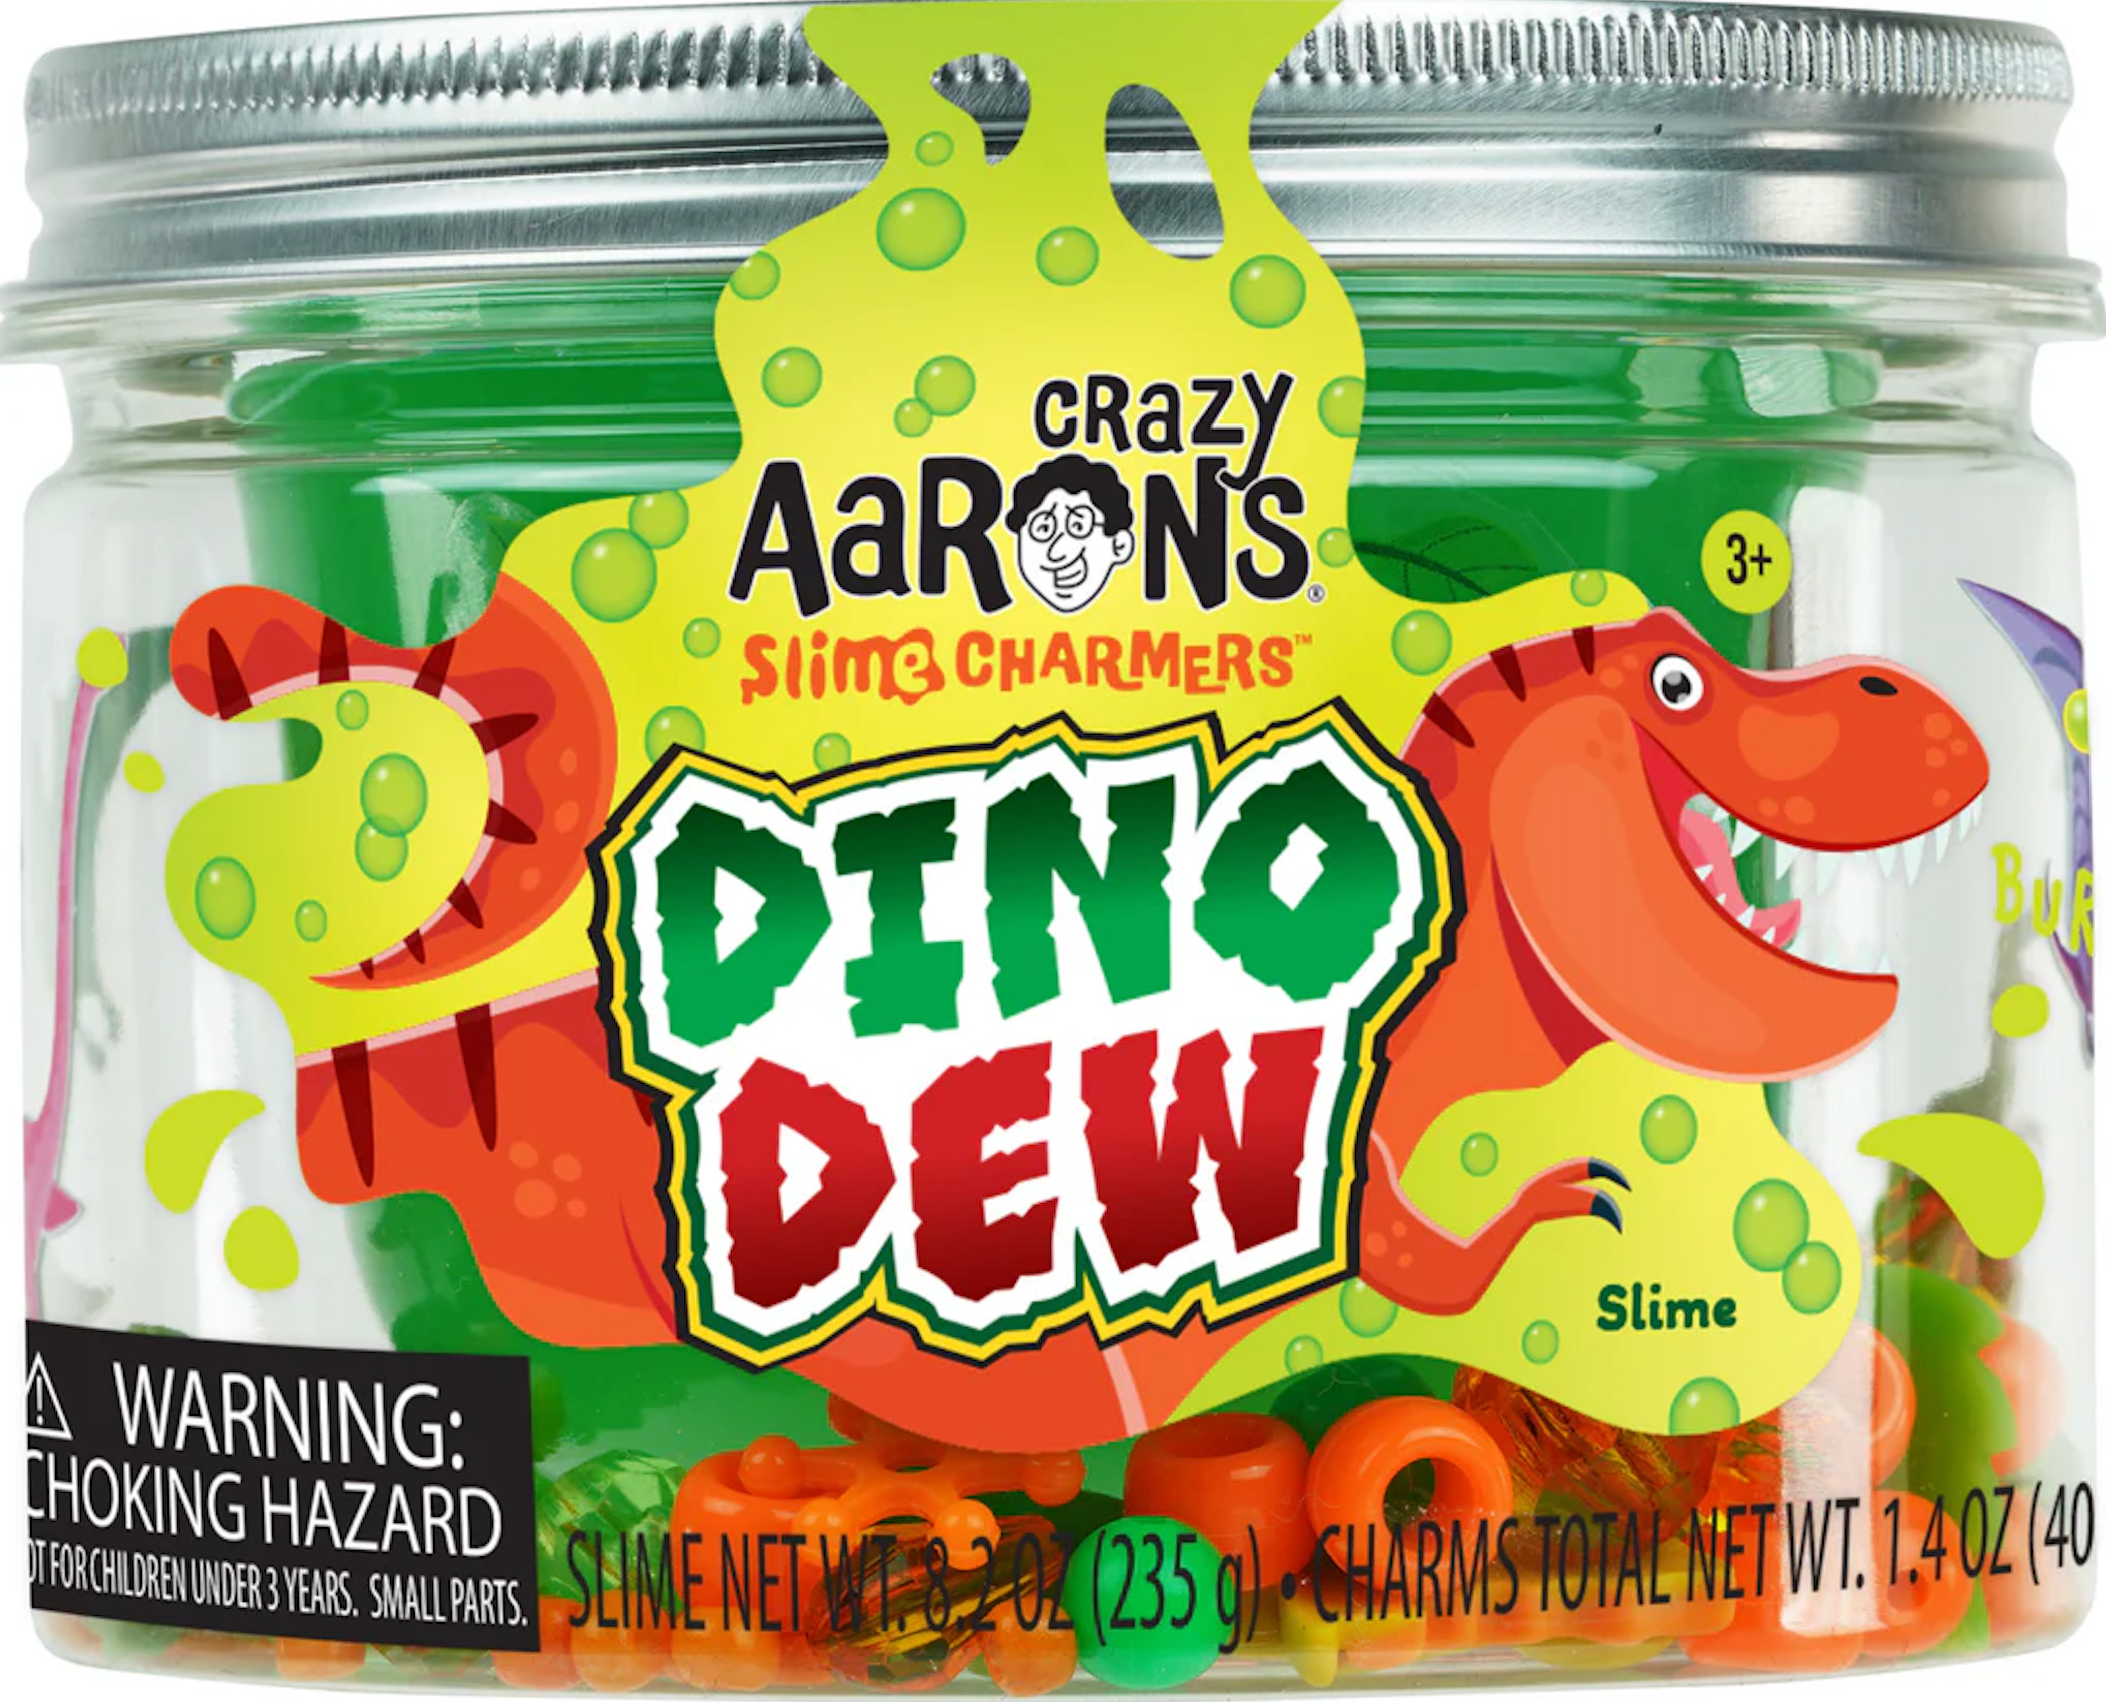 Crazy Aaron's Slime Charmers